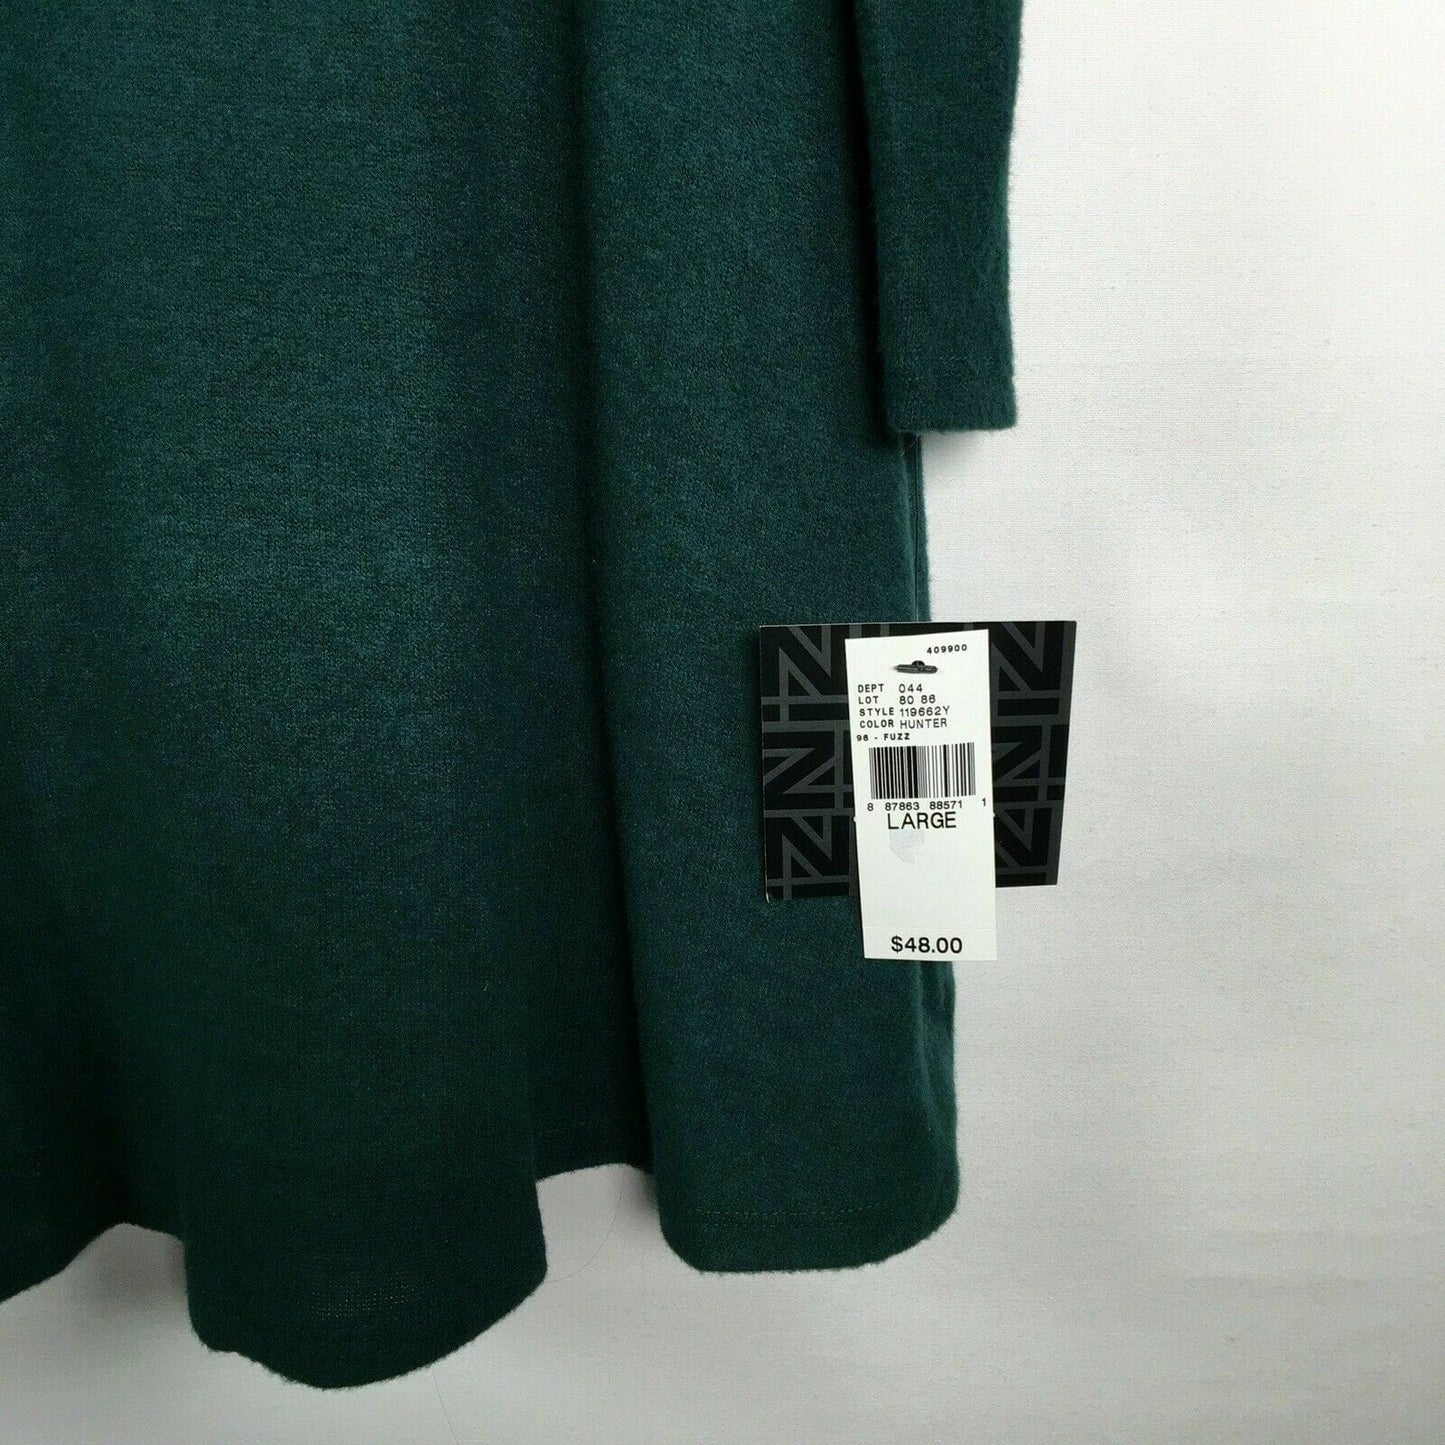 IZ Byer Women’s Hunter Green Long Sleeve Shoulder Ruffle Sweater Dress Sz L NWT